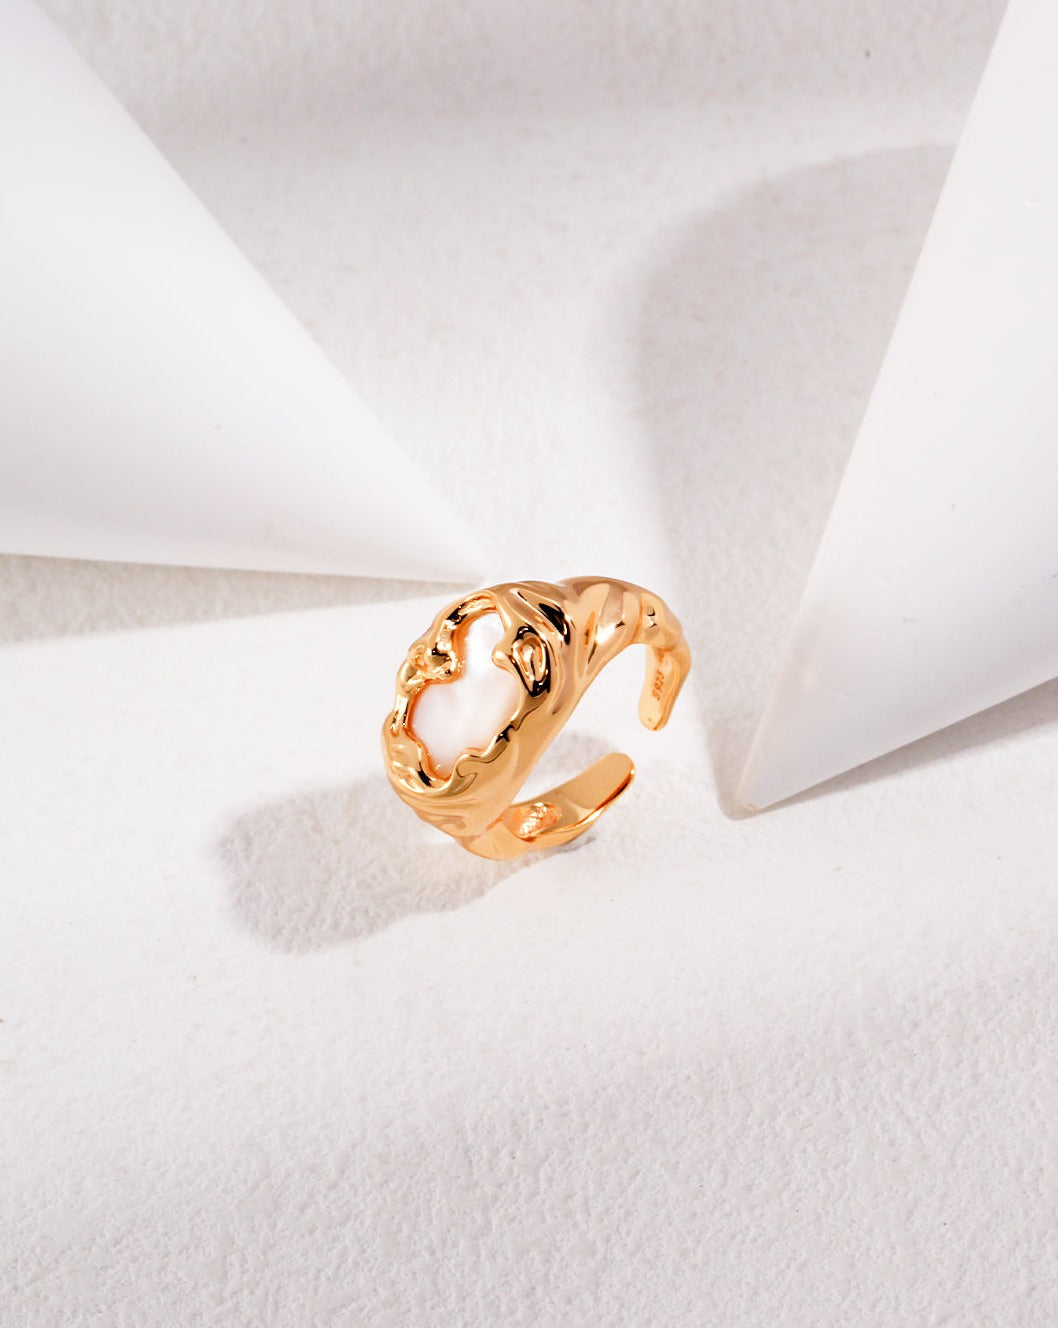 fashion-jewelry-minimalist-jewelry-design-jewelry-statement-necklace-pearl-earring-bracelet-rings-gold-coated-silver-bijoux-retro-gold